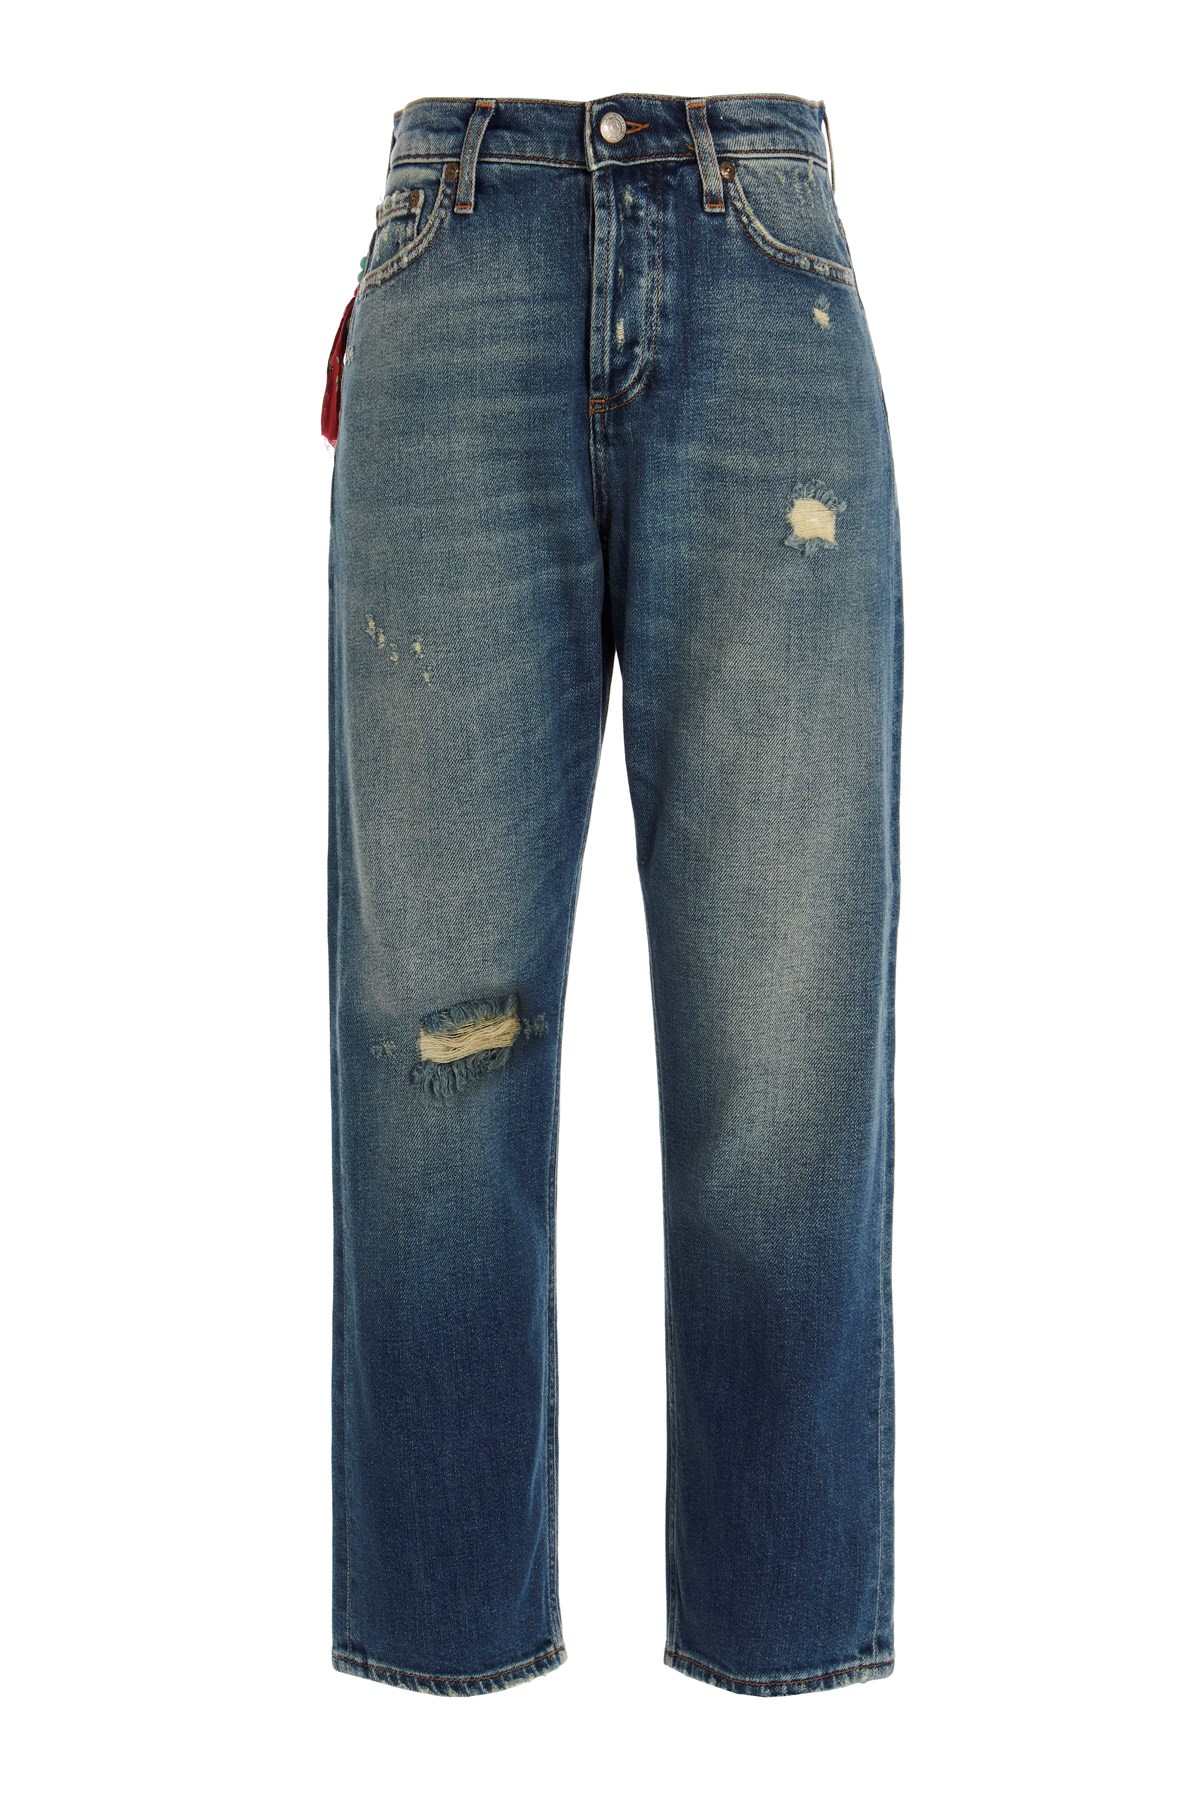 ROY ROGERS Jeans 'Tilda'